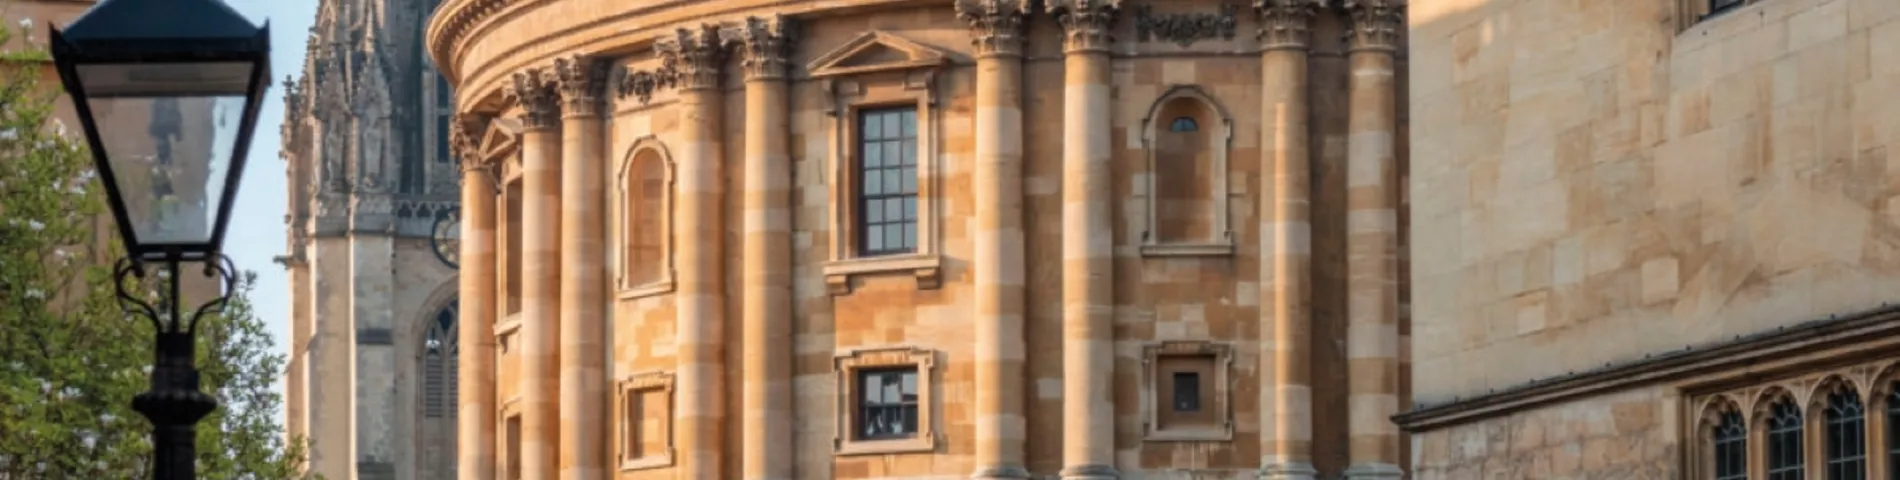 Oxford Royale Academy billede 1